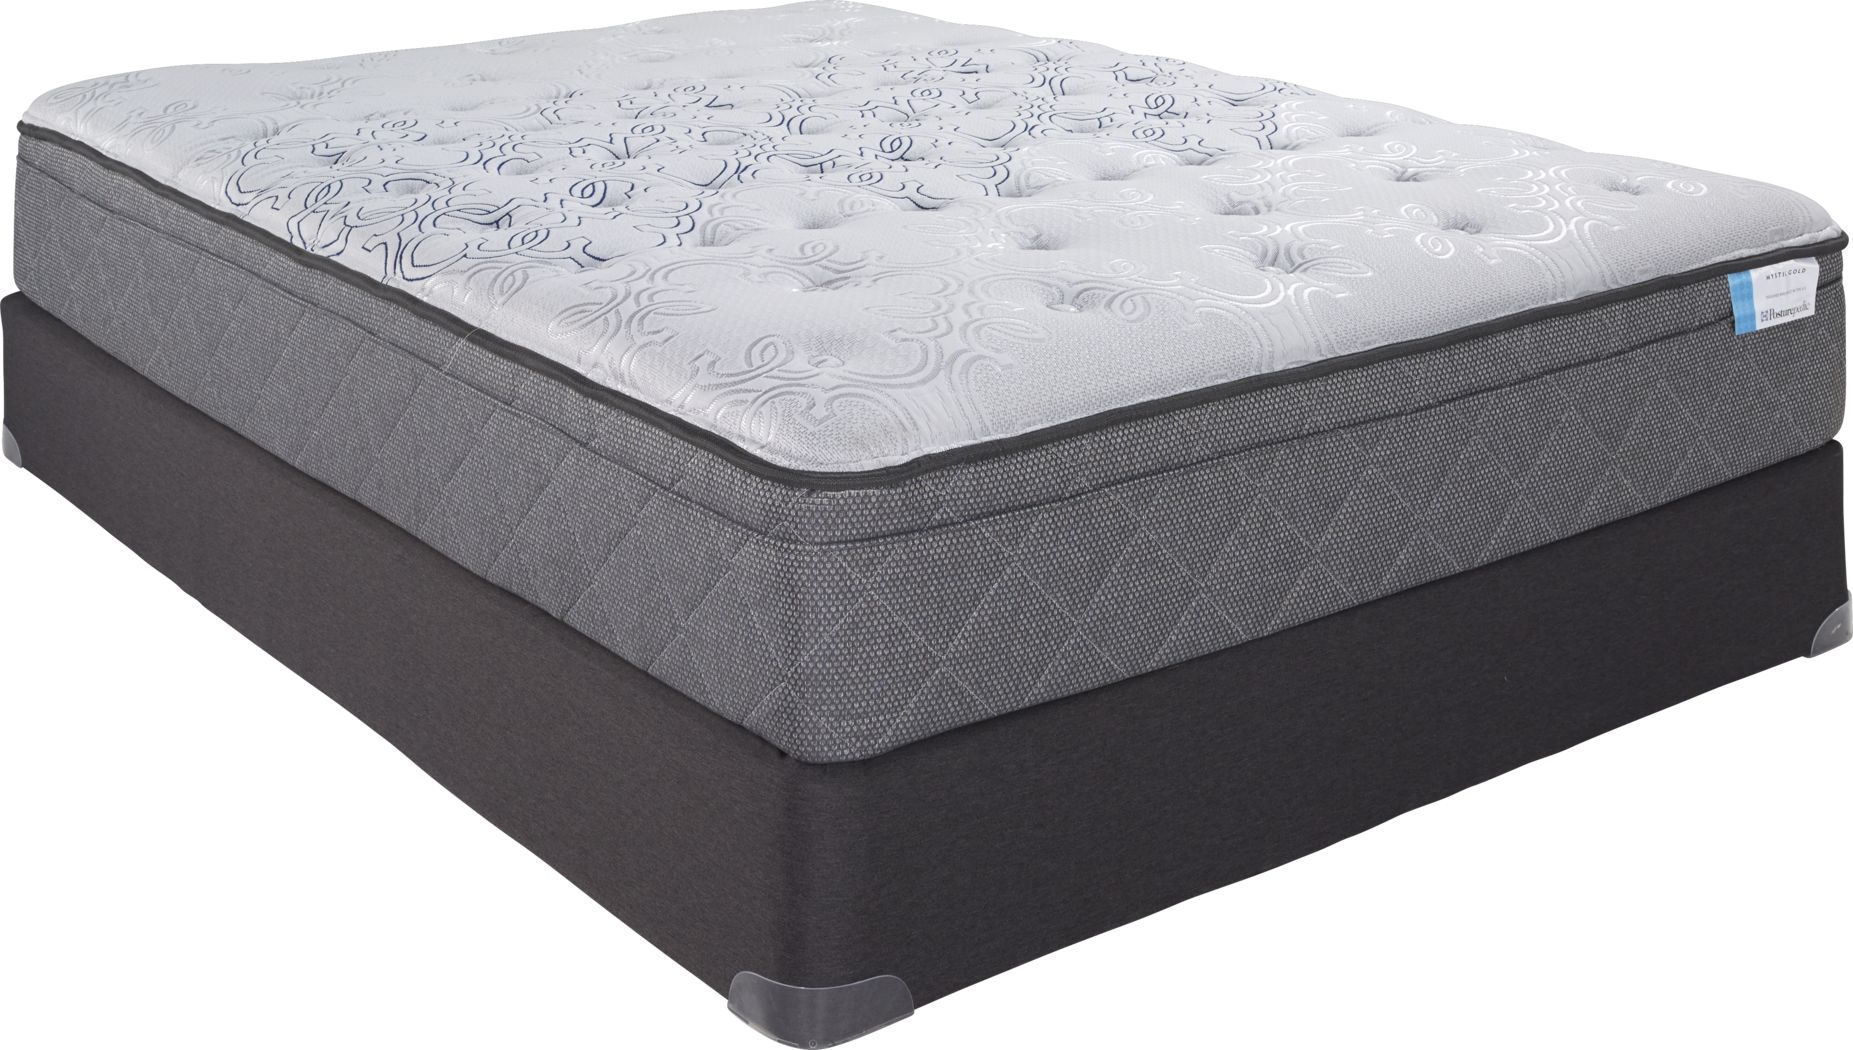 low profile queen mattress set